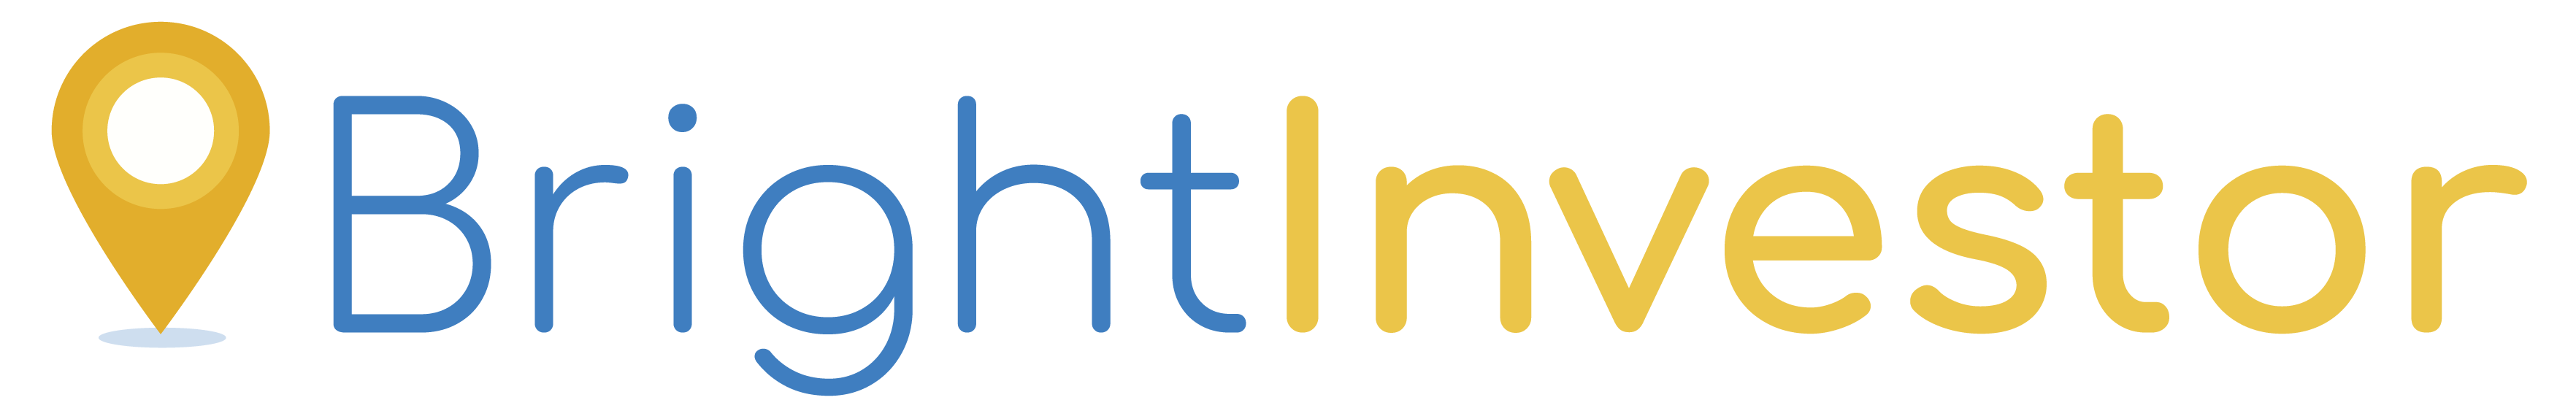 BrightInvestor logo